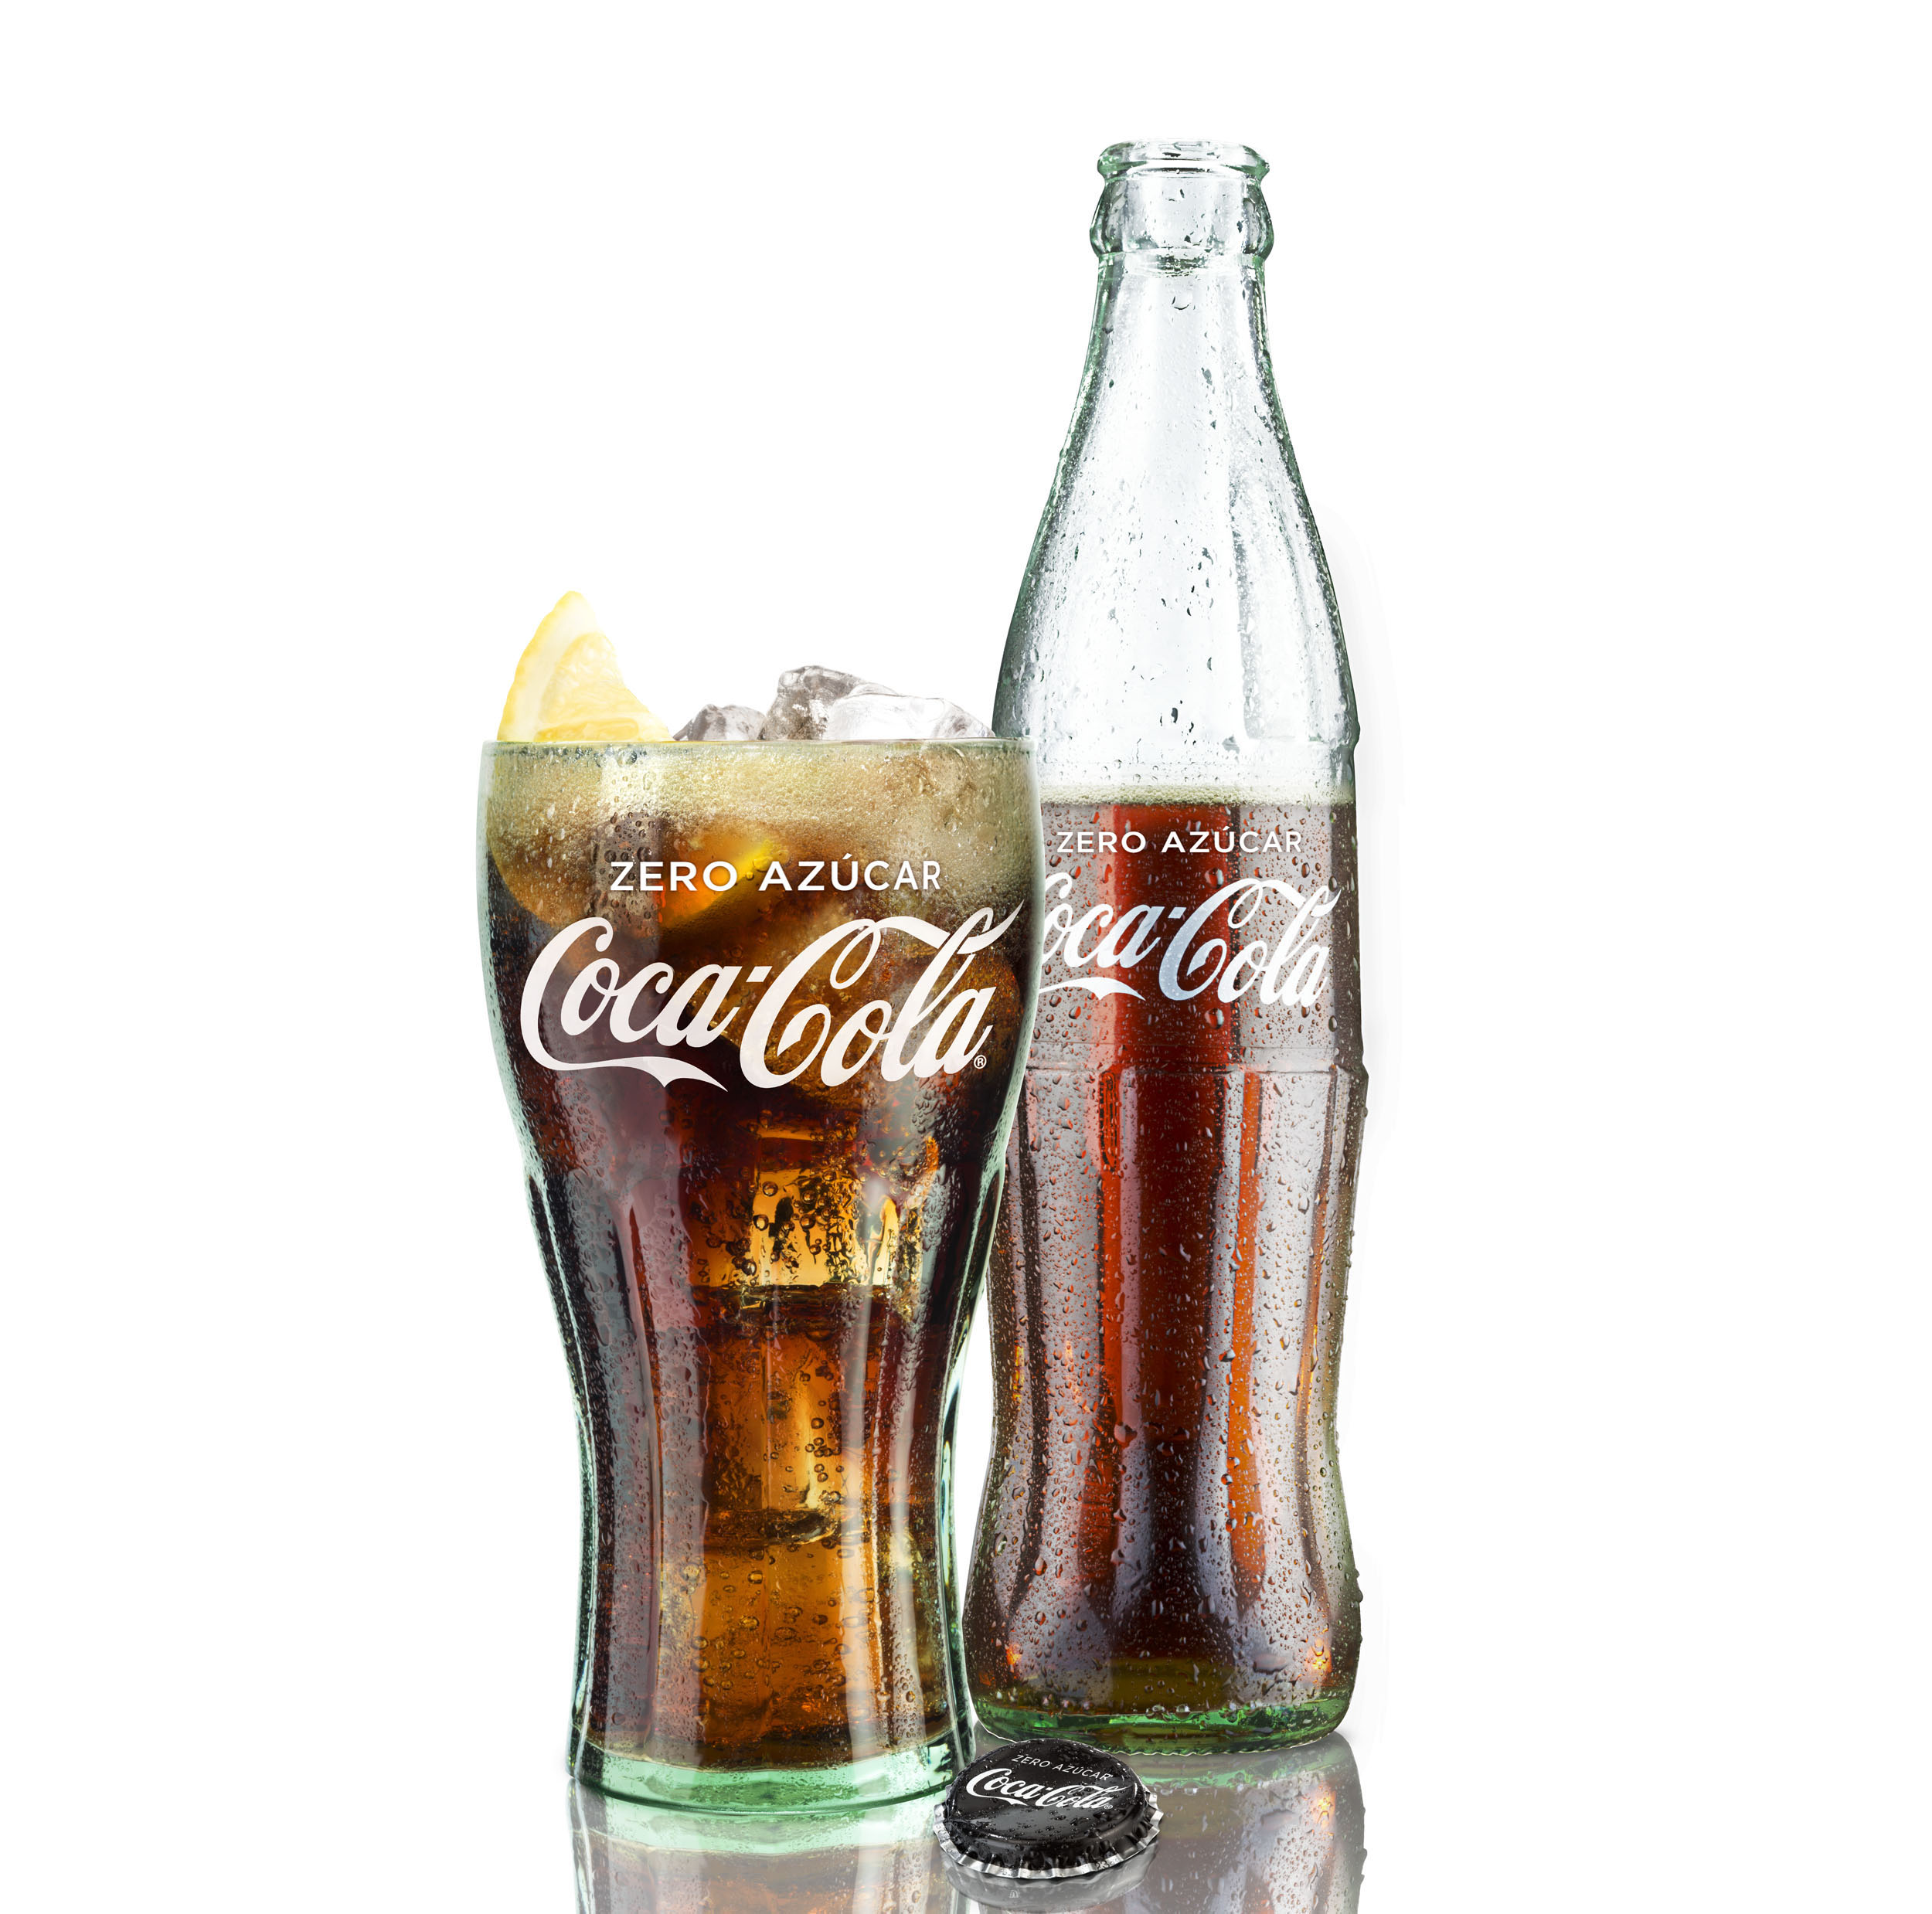 Coca-cola Zero Zero en vidrio retornable 350 ml - Pack 24 Ud – Re